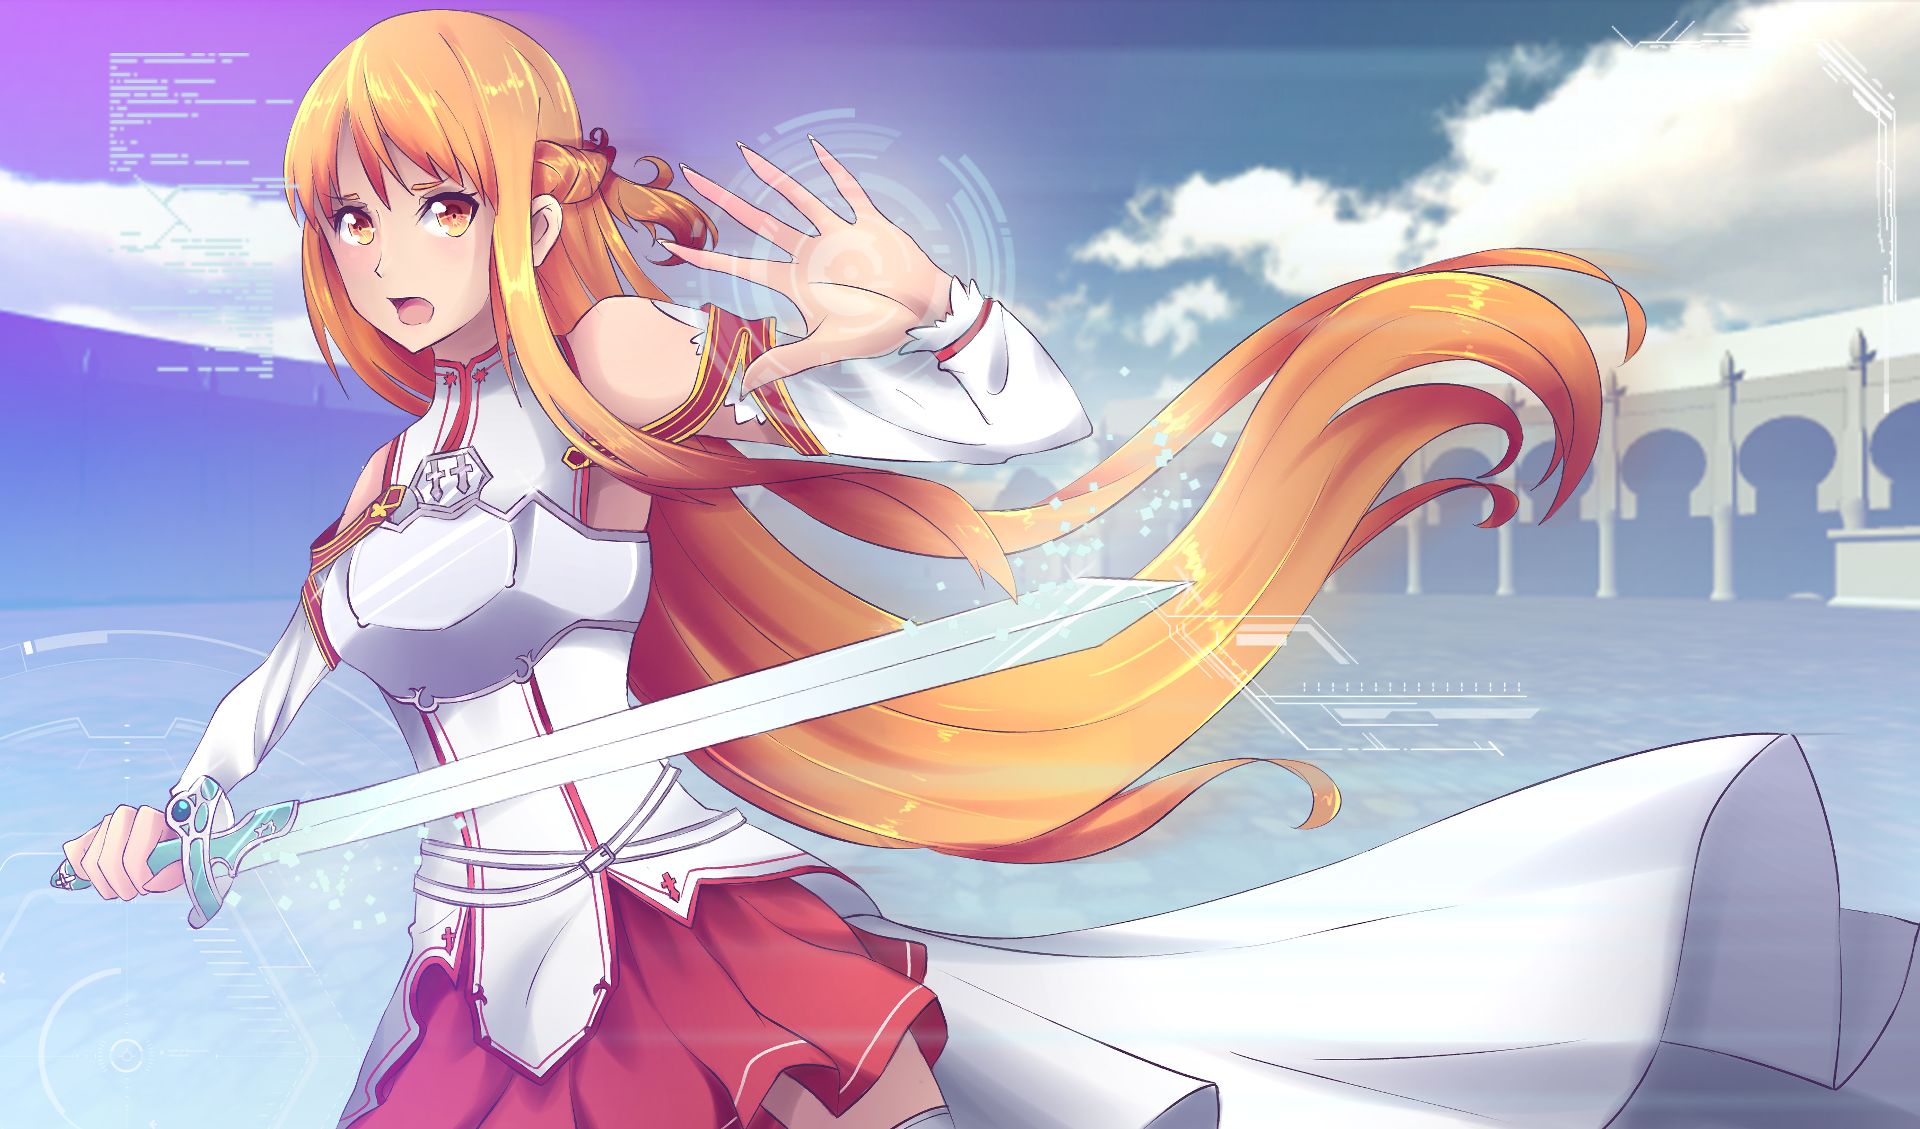 Download Anime Fight Sword Art Online Wallpaper